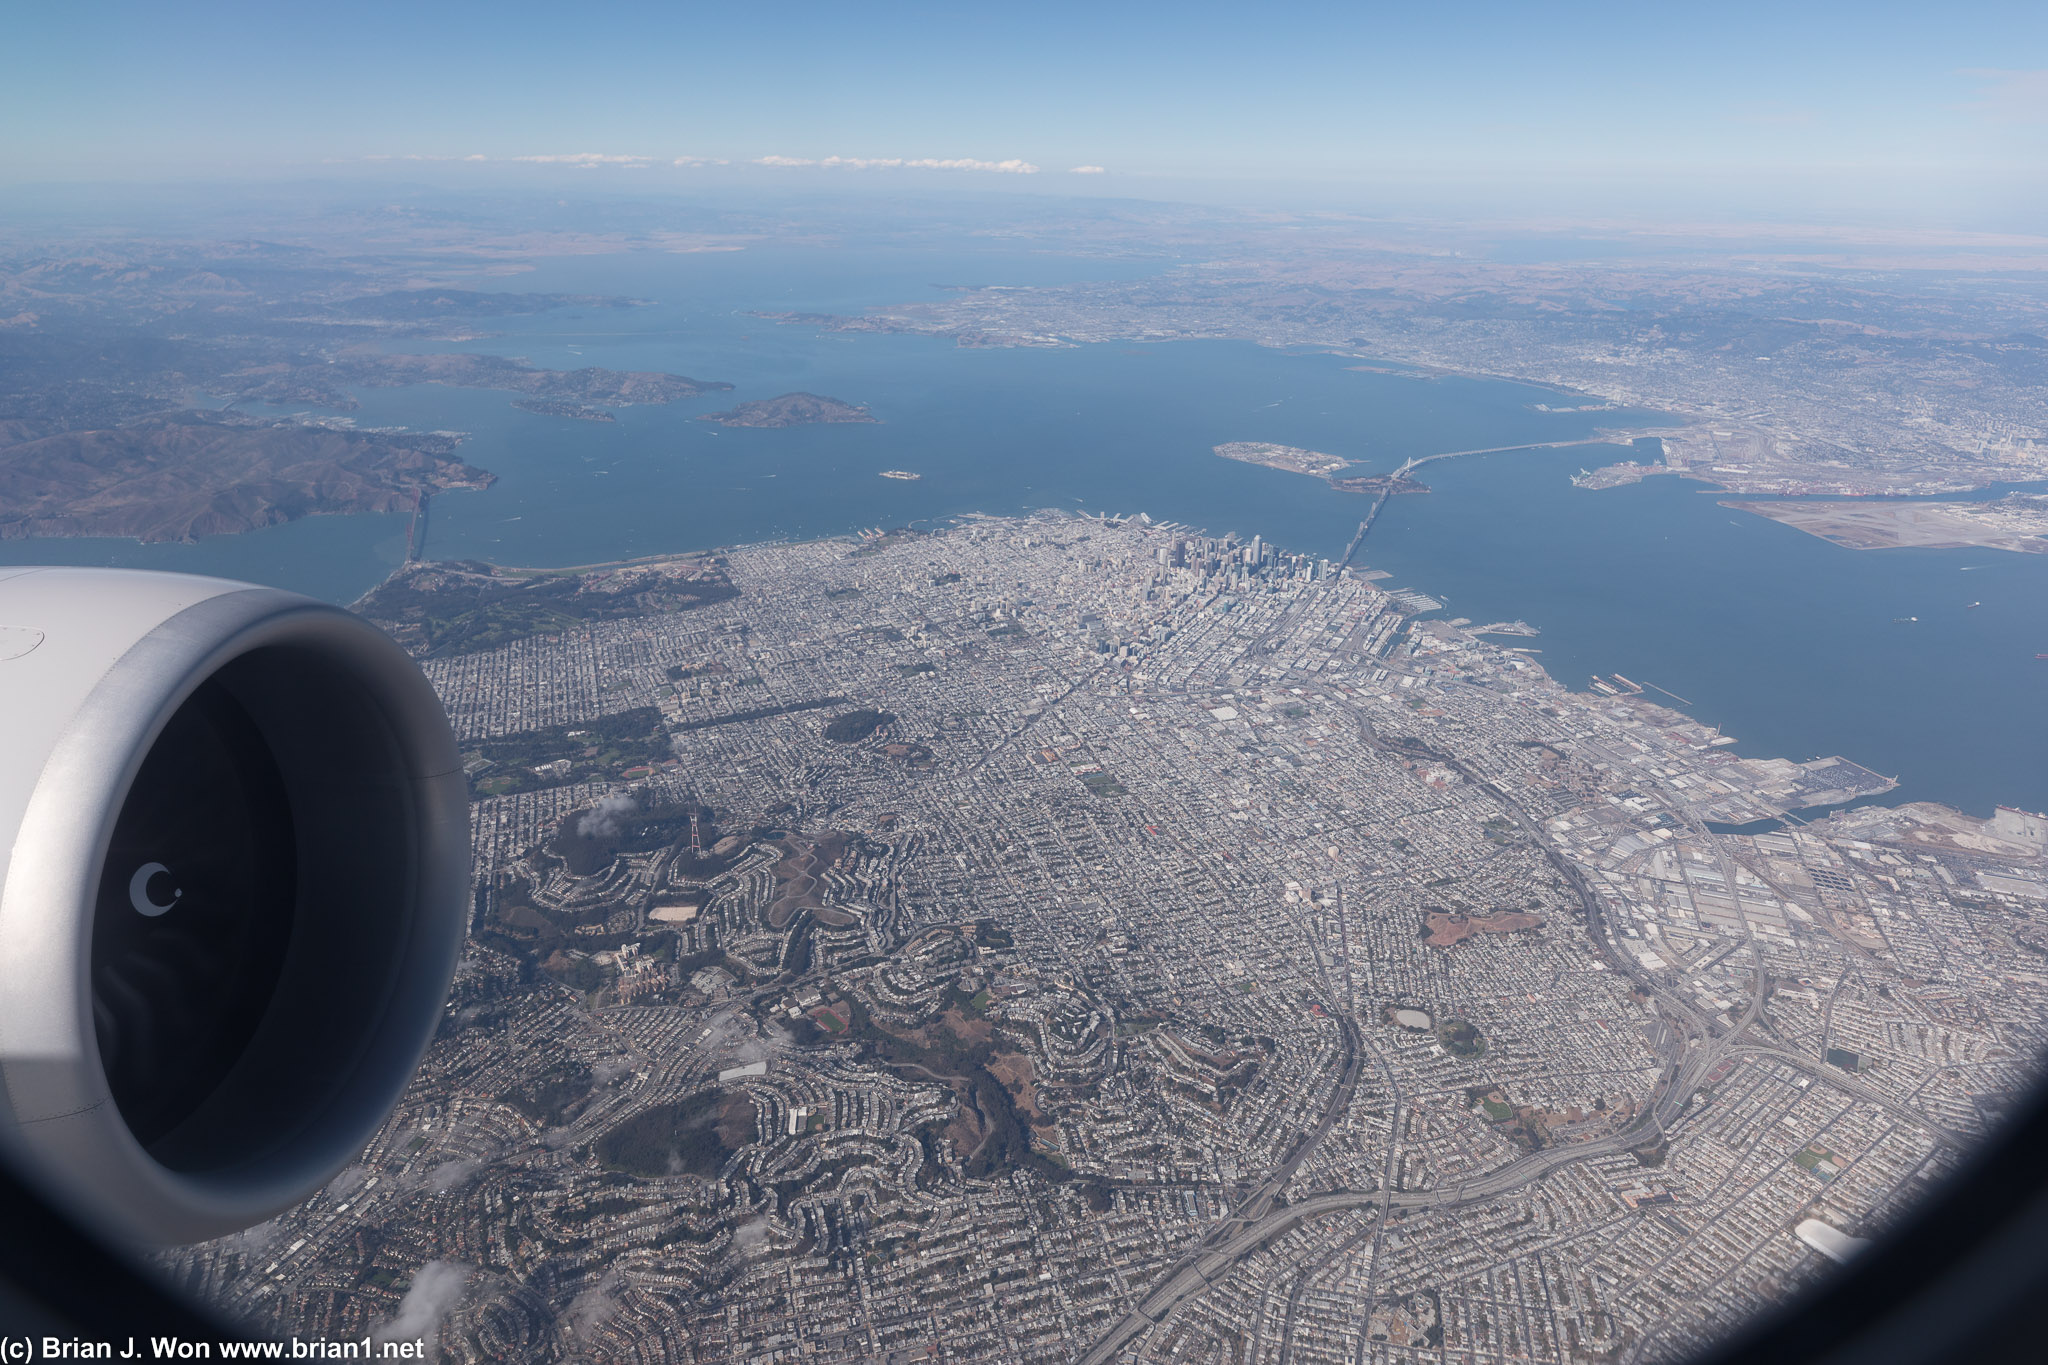 San Francisco beckons!